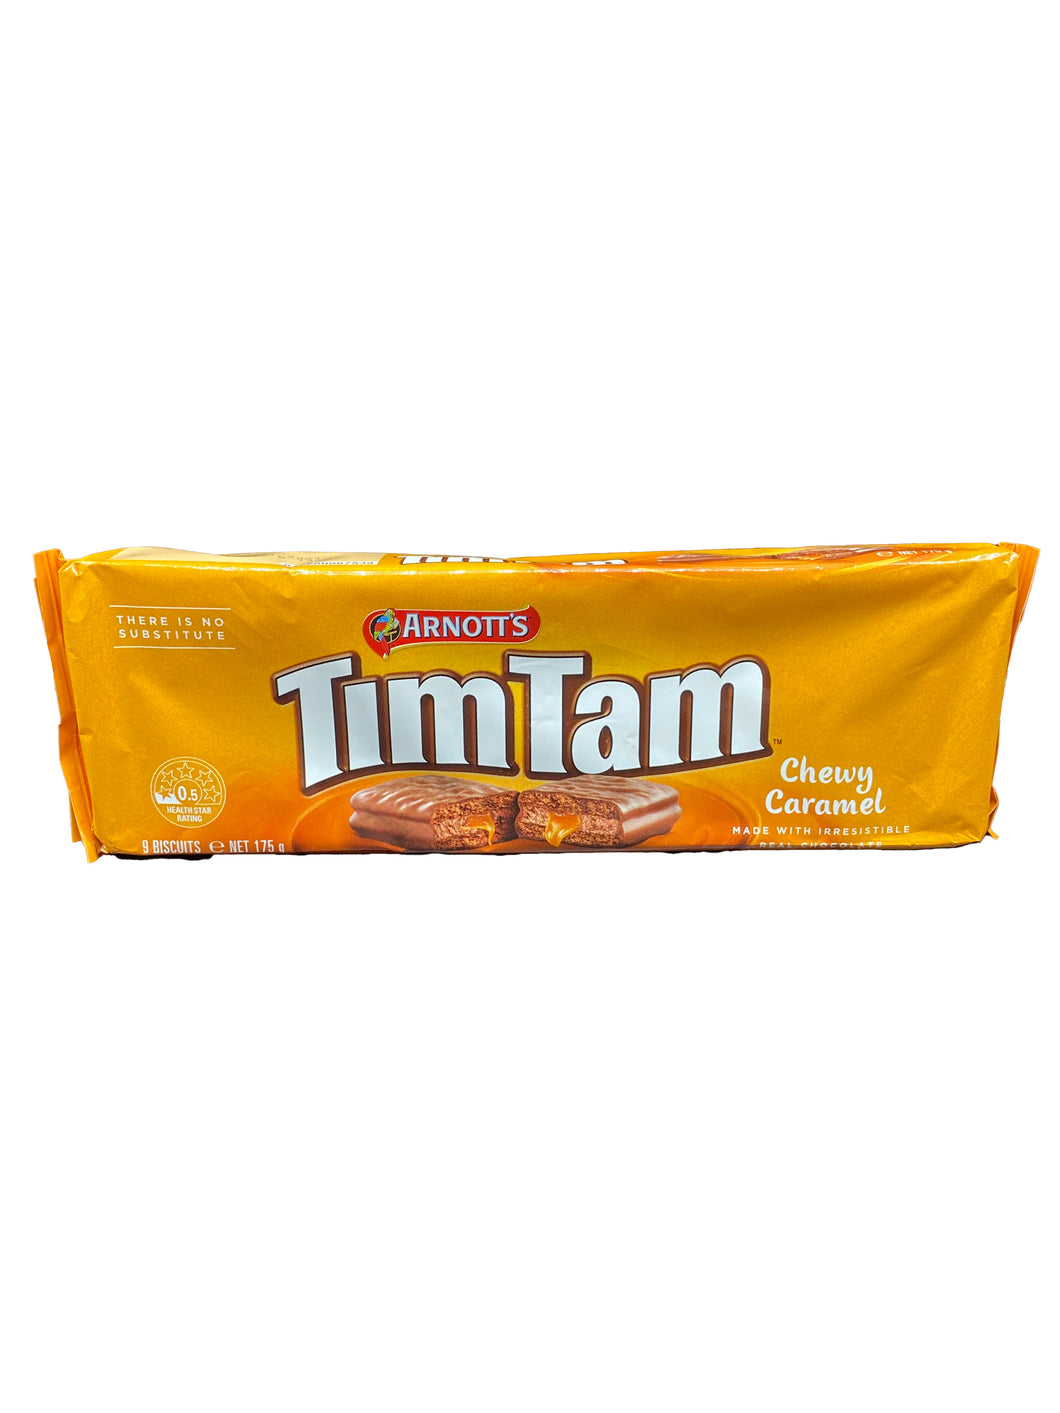 Arnott's Tim Tam Caramel Biscuits 175g